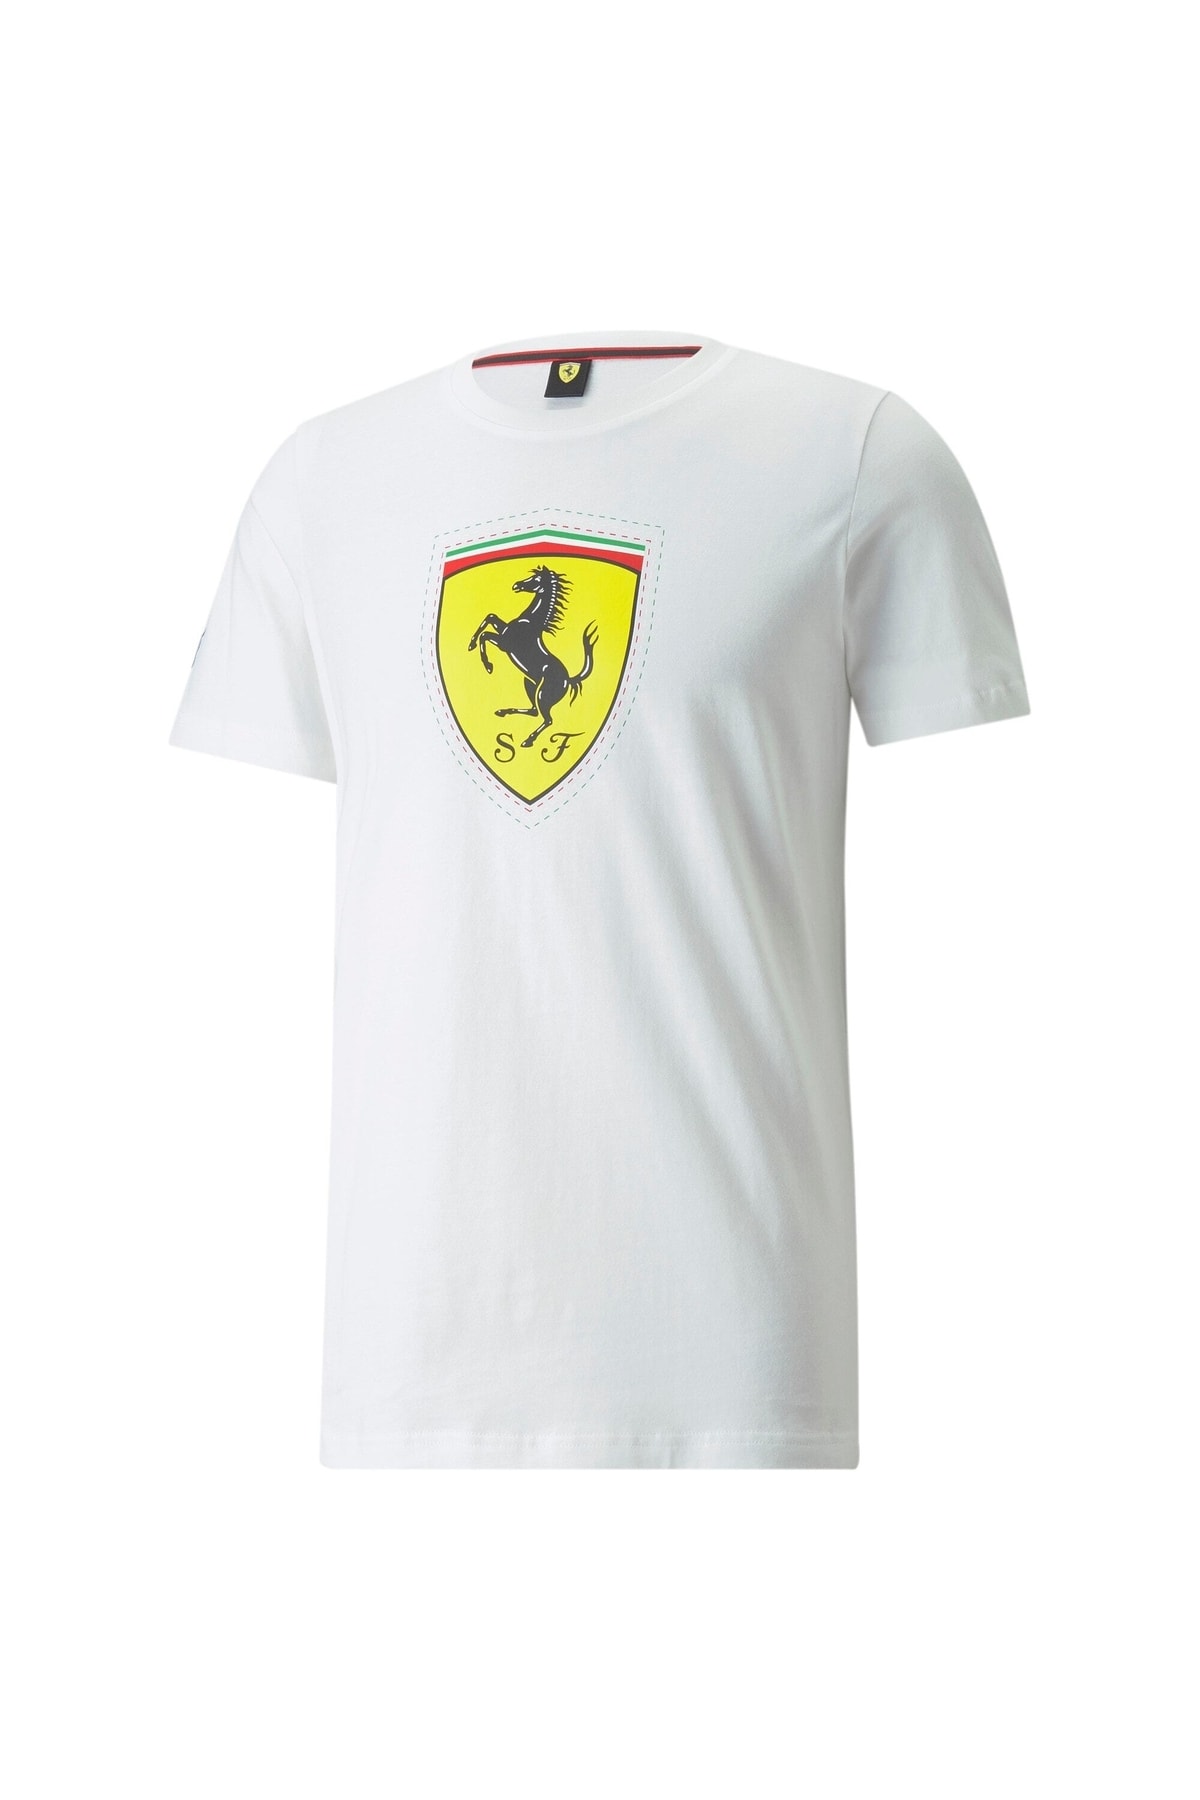 Puma Scuderıa Ferrarı Race Renkli Armalı Erkek T-shirt